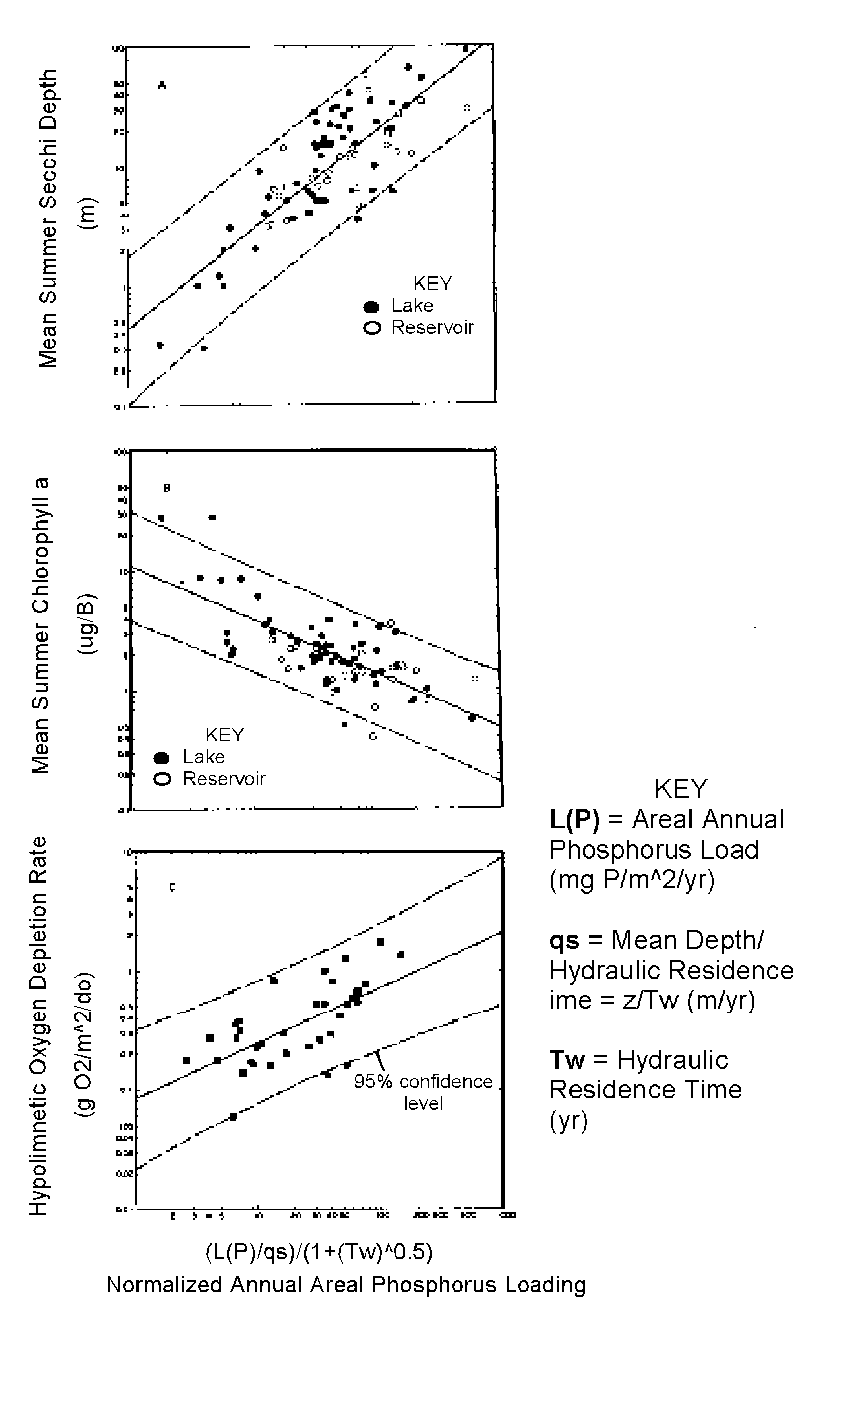 water quality response relationship plots